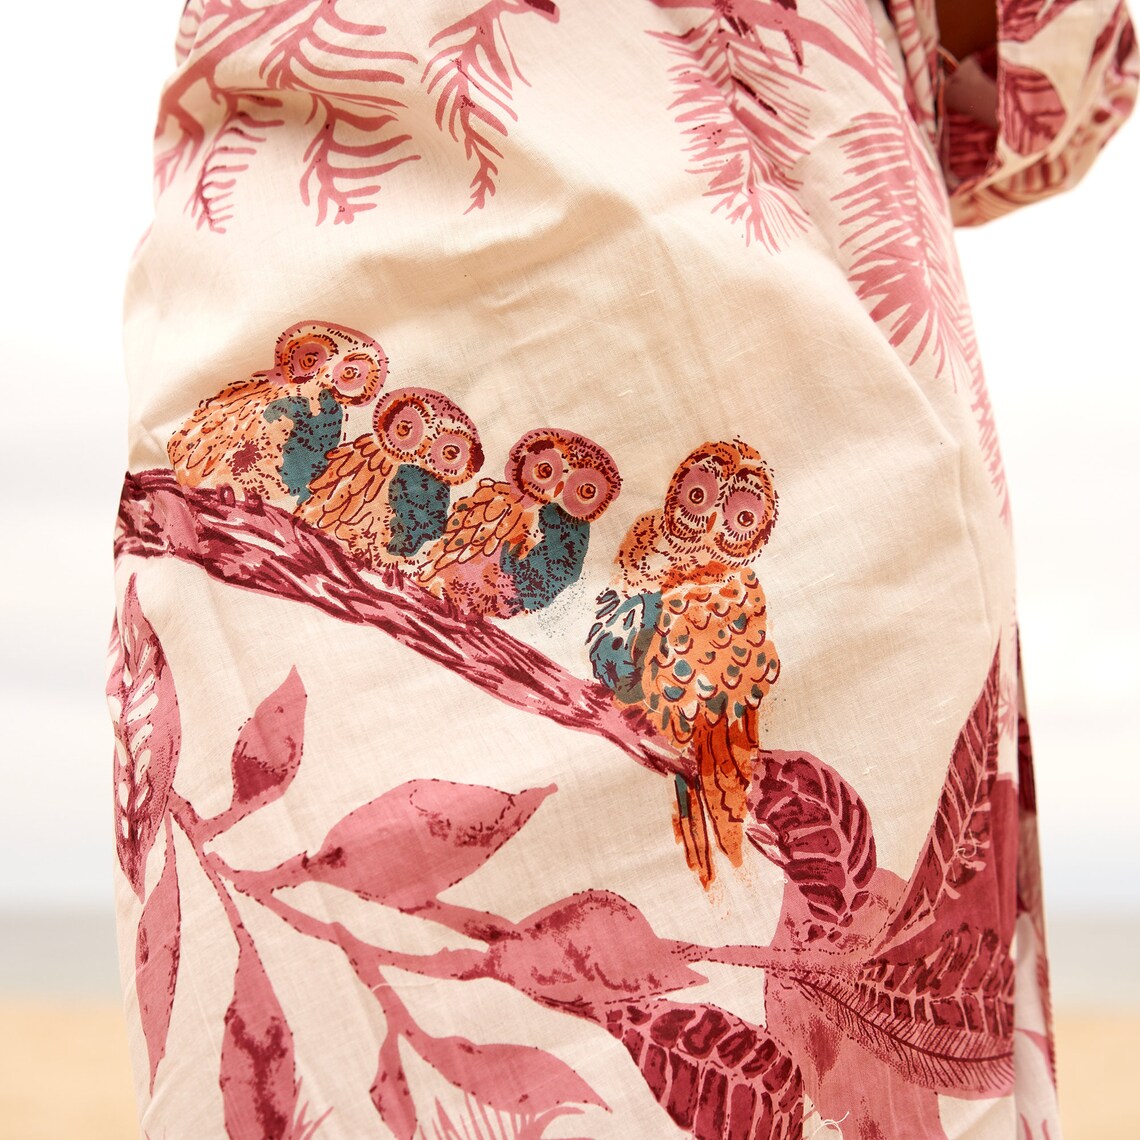 Kimono Cotton Kimono Bathrobe Frida Valentines Day GiftBird Bathrobe Turkish Bathrobe Cardigan Nightwear Dressing Gown - Pink Owl